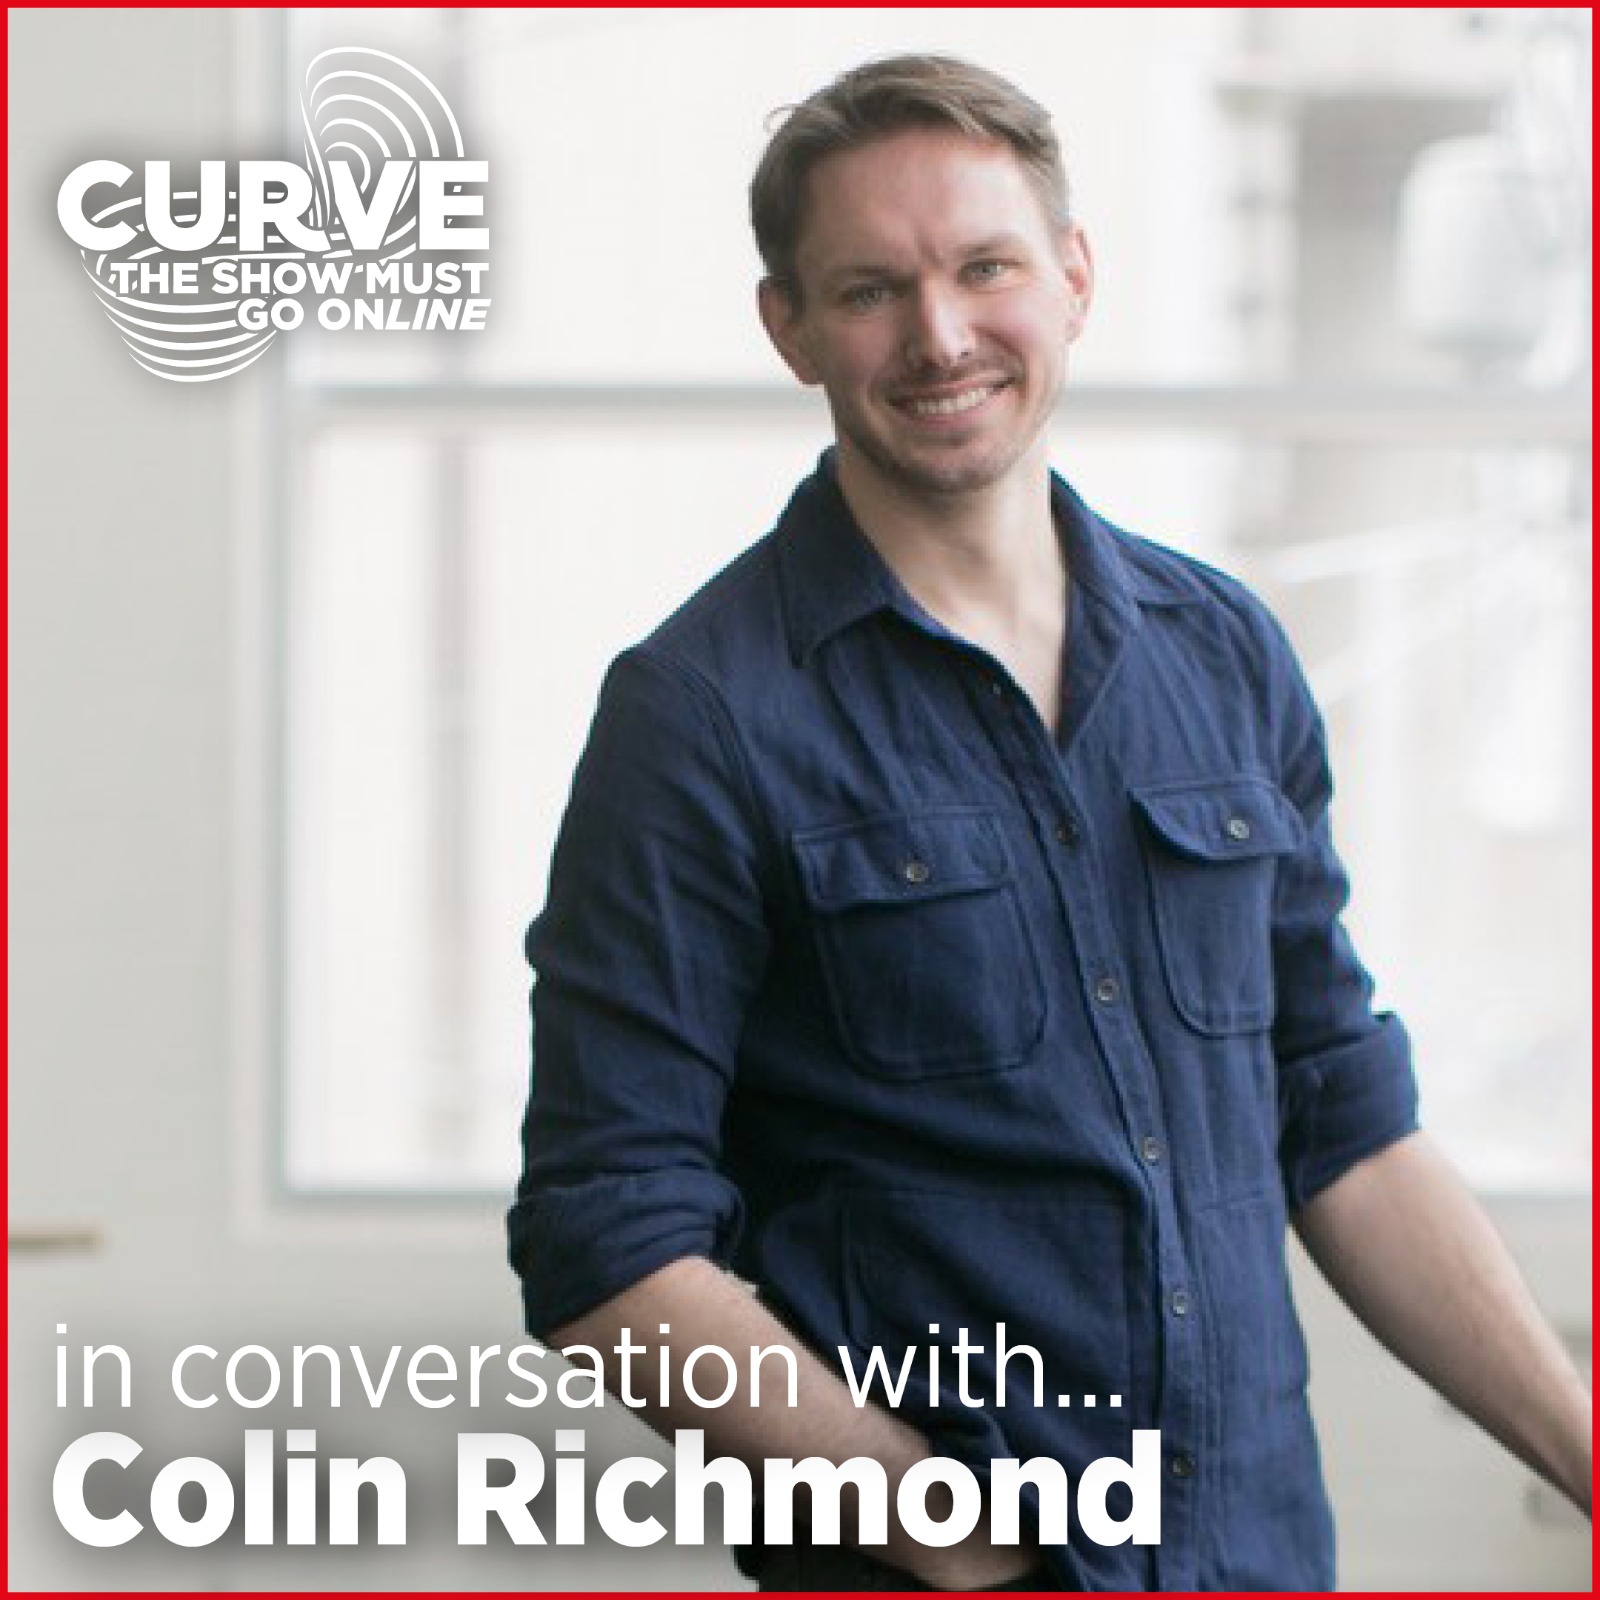 Colin Richmond smiles in a bright room, wearing a dark blue shirt.